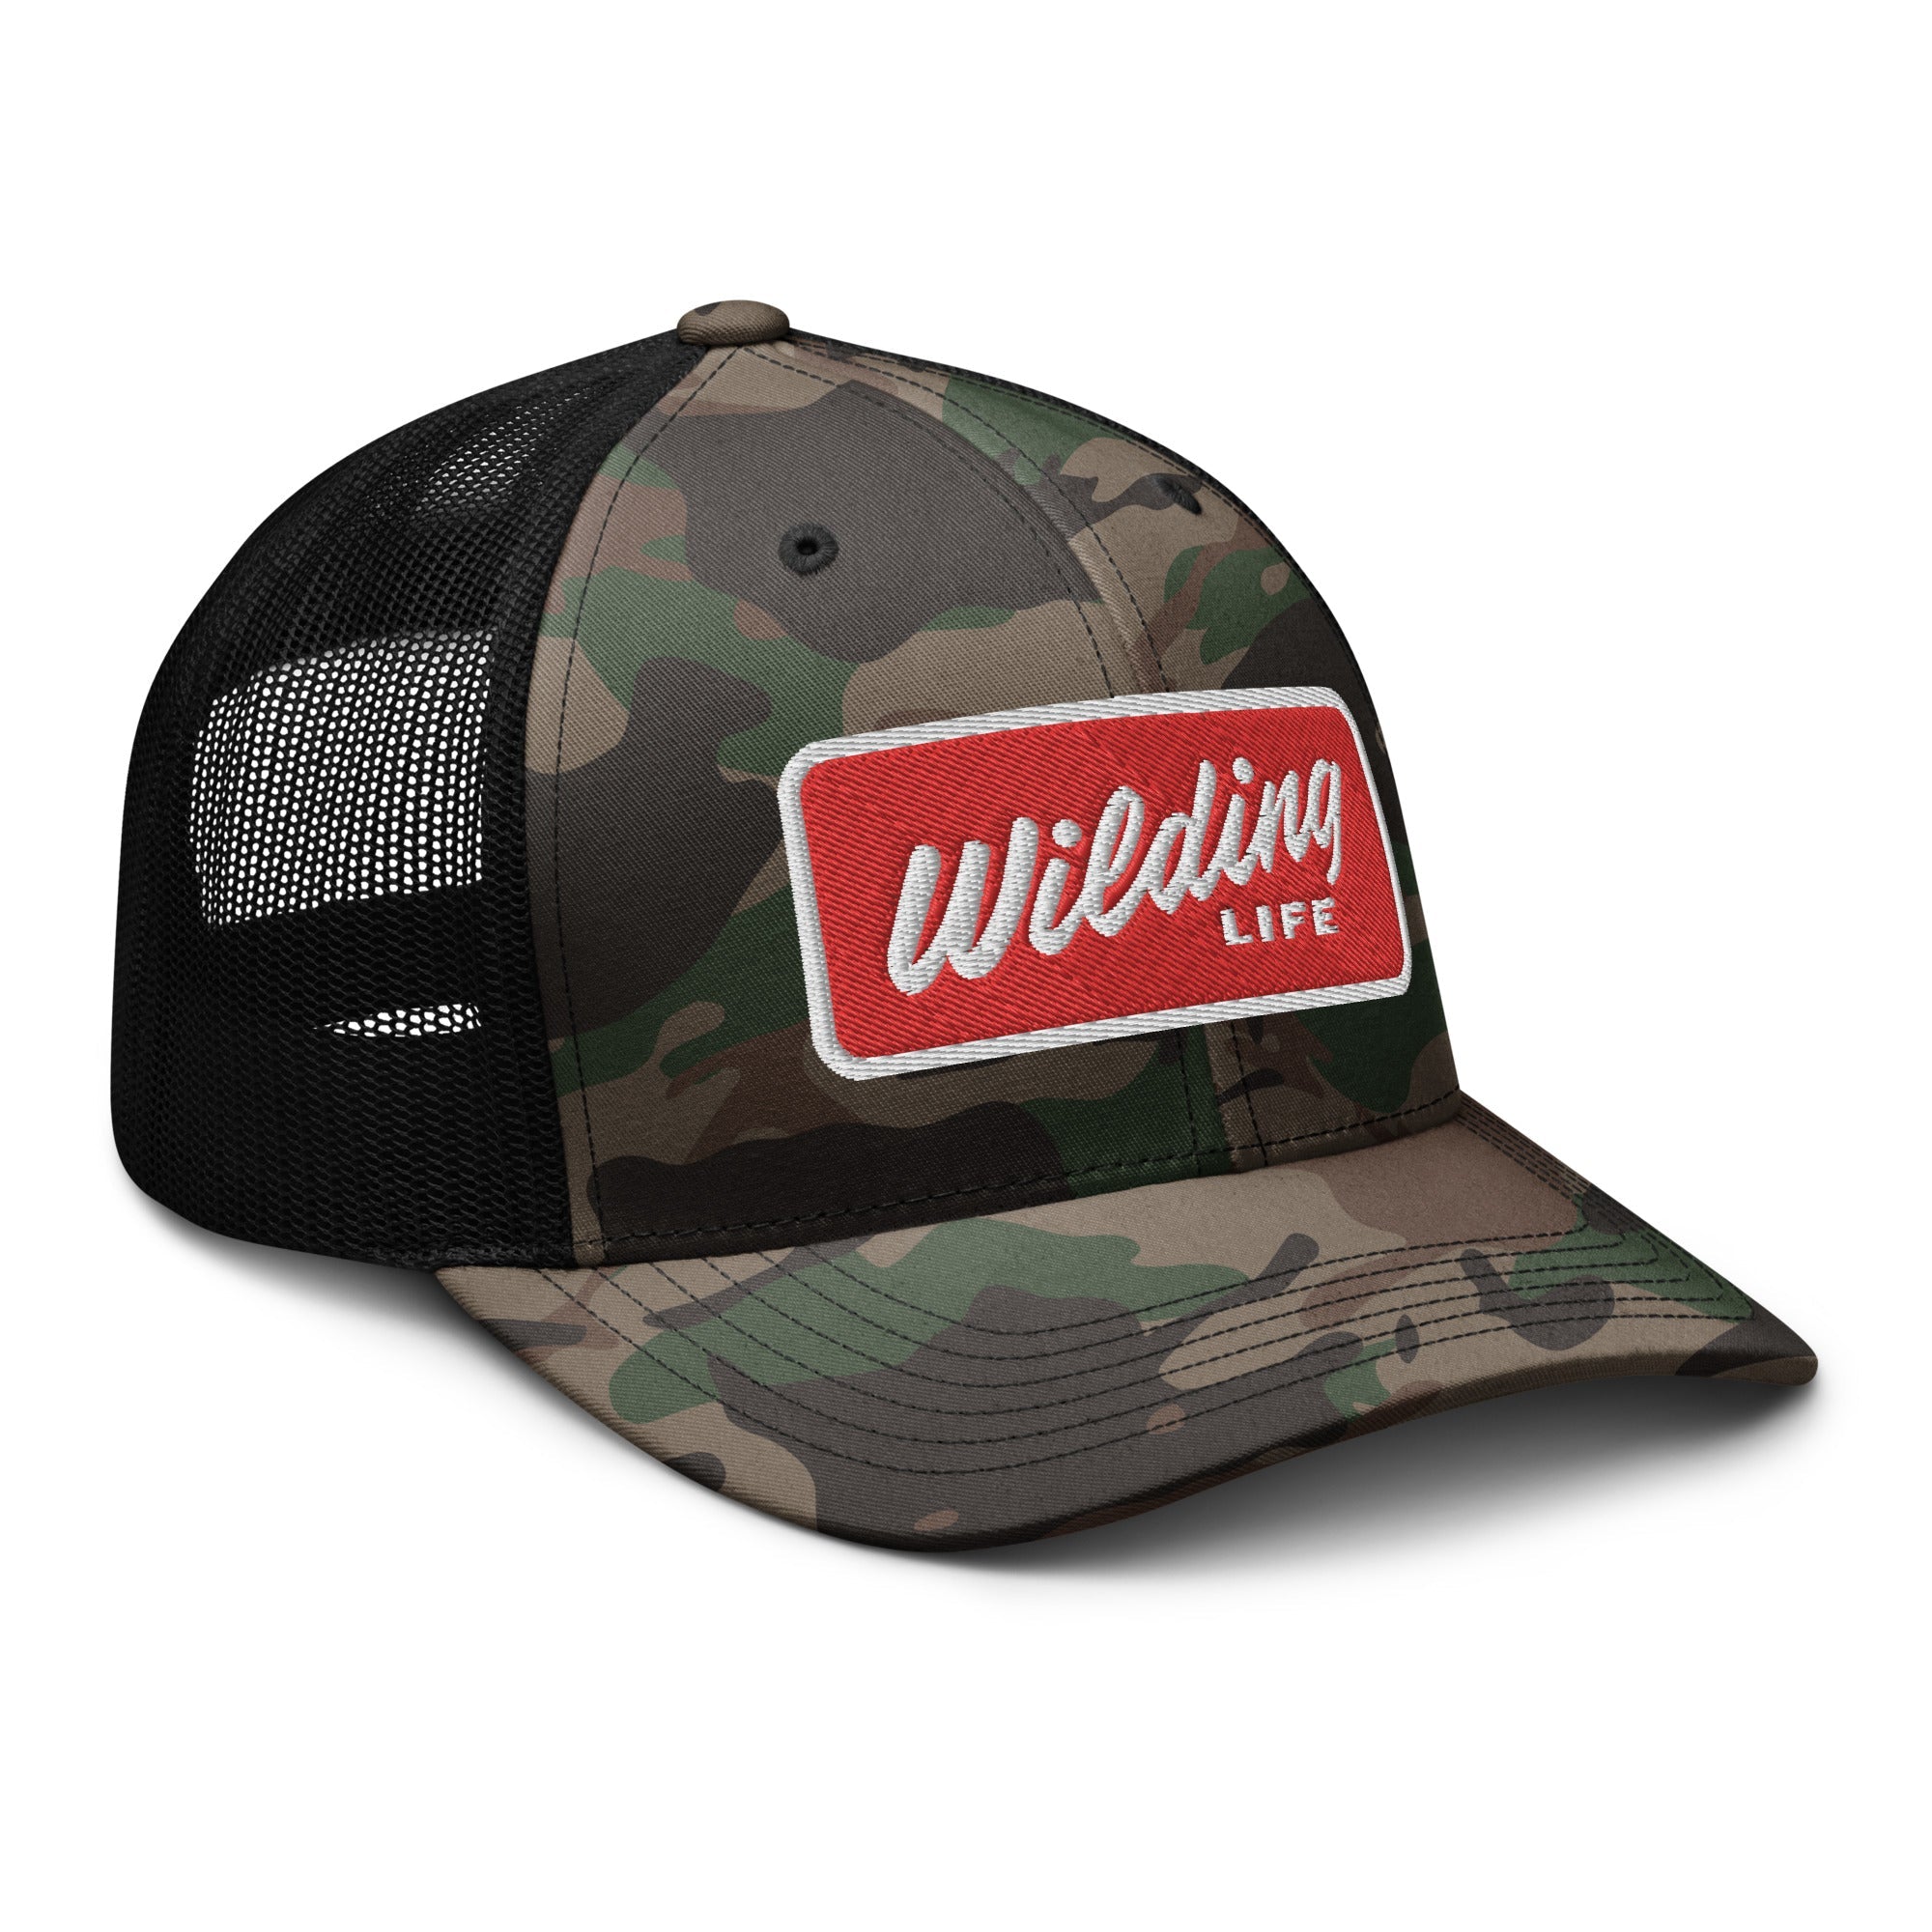 Wilding Life Camo Trucker Hat - Wilding Life